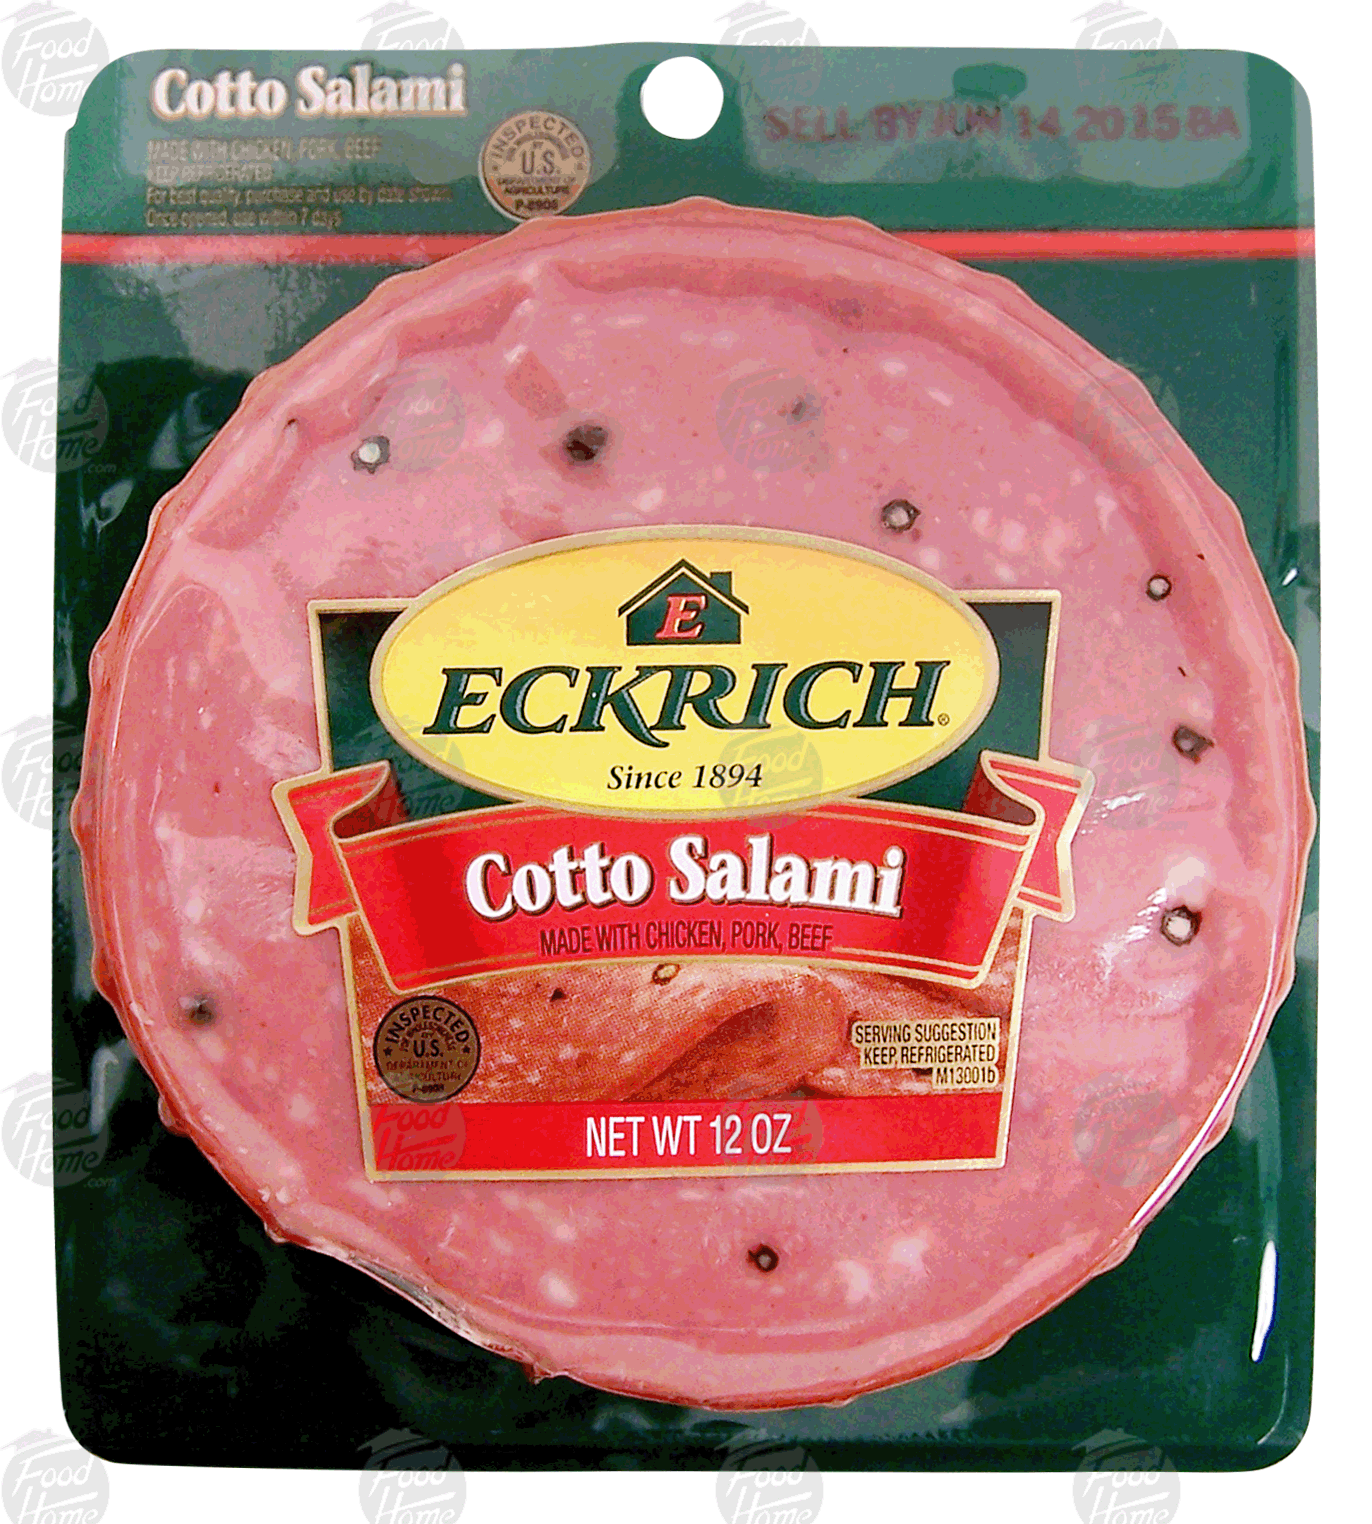 Eckrich  cotto salami Full-Size Picture